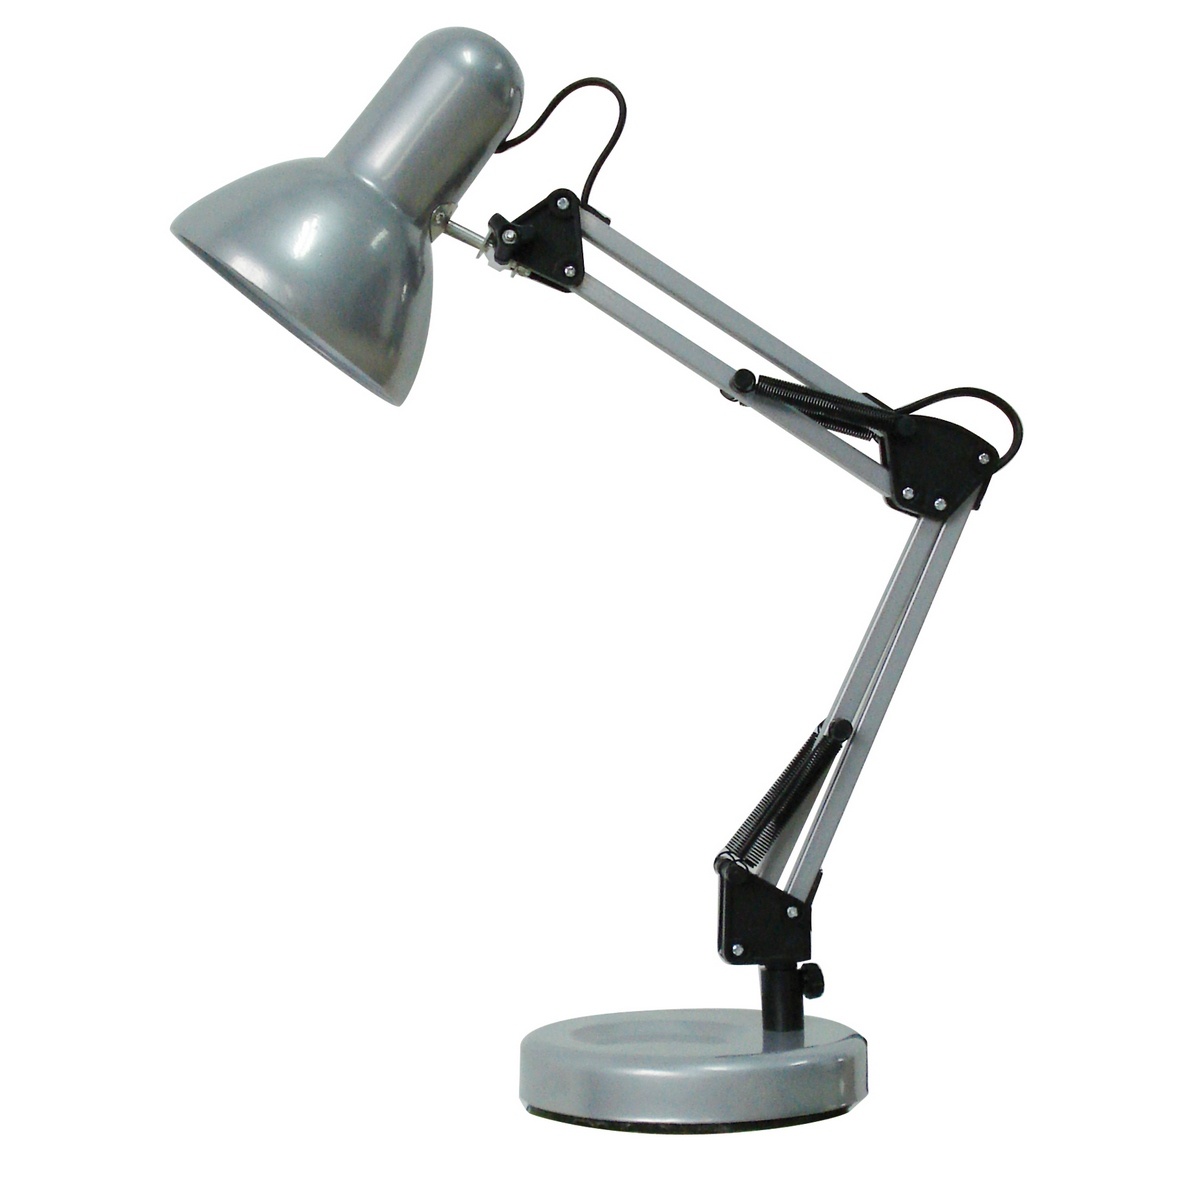 Rabalux 4213 Samson stolní lampa stříbrná, 49 cm